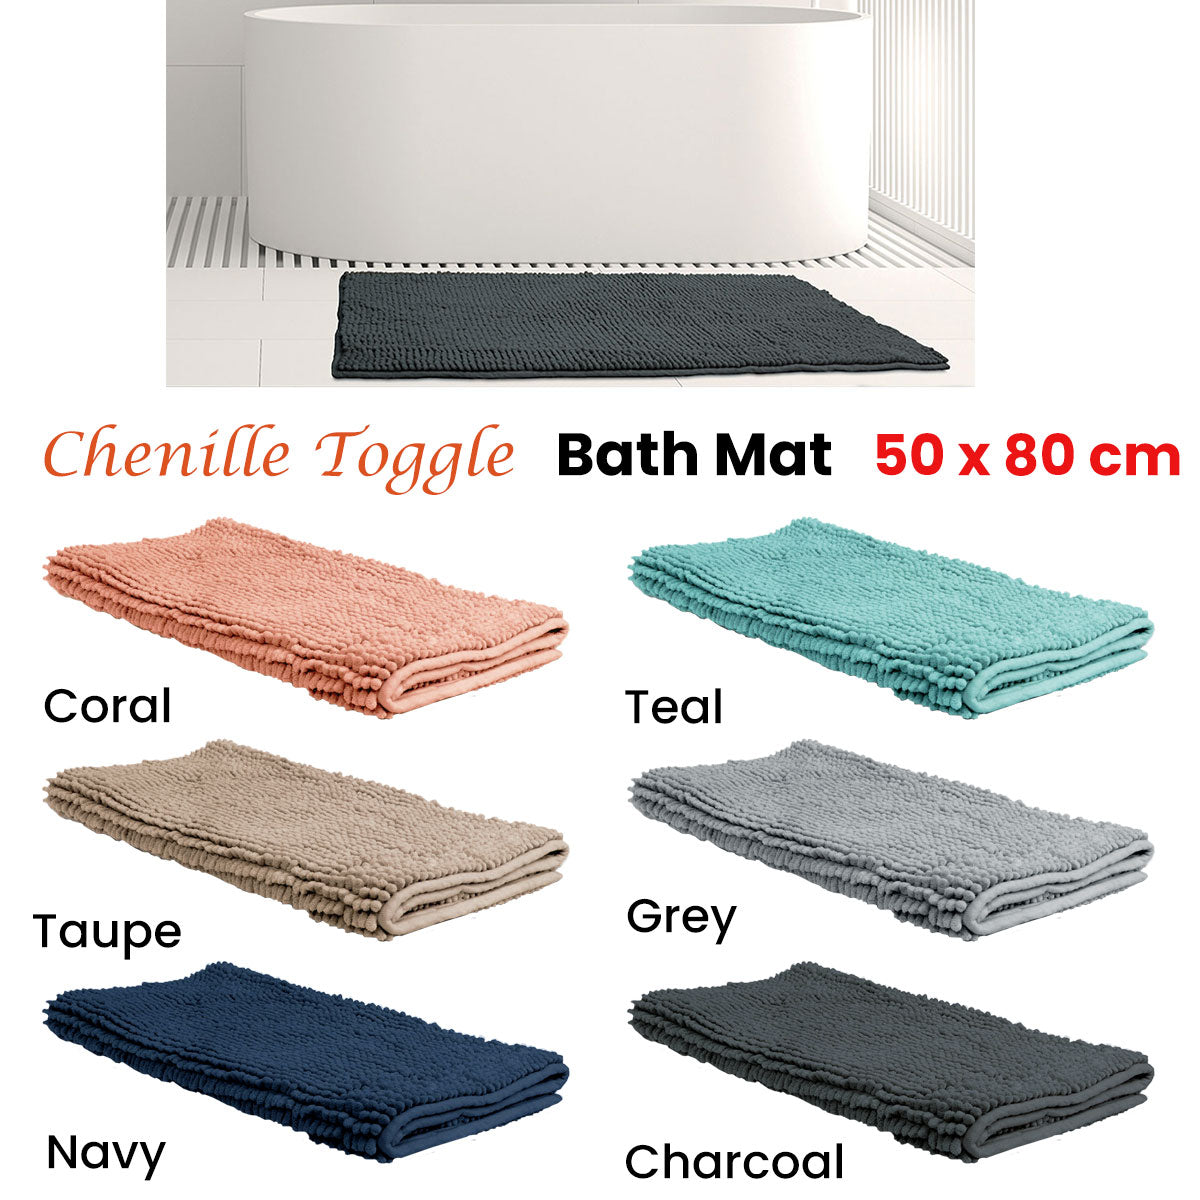 Chenille Toggle Bath Mat 50 x 80cm Navy - BM House & Garden